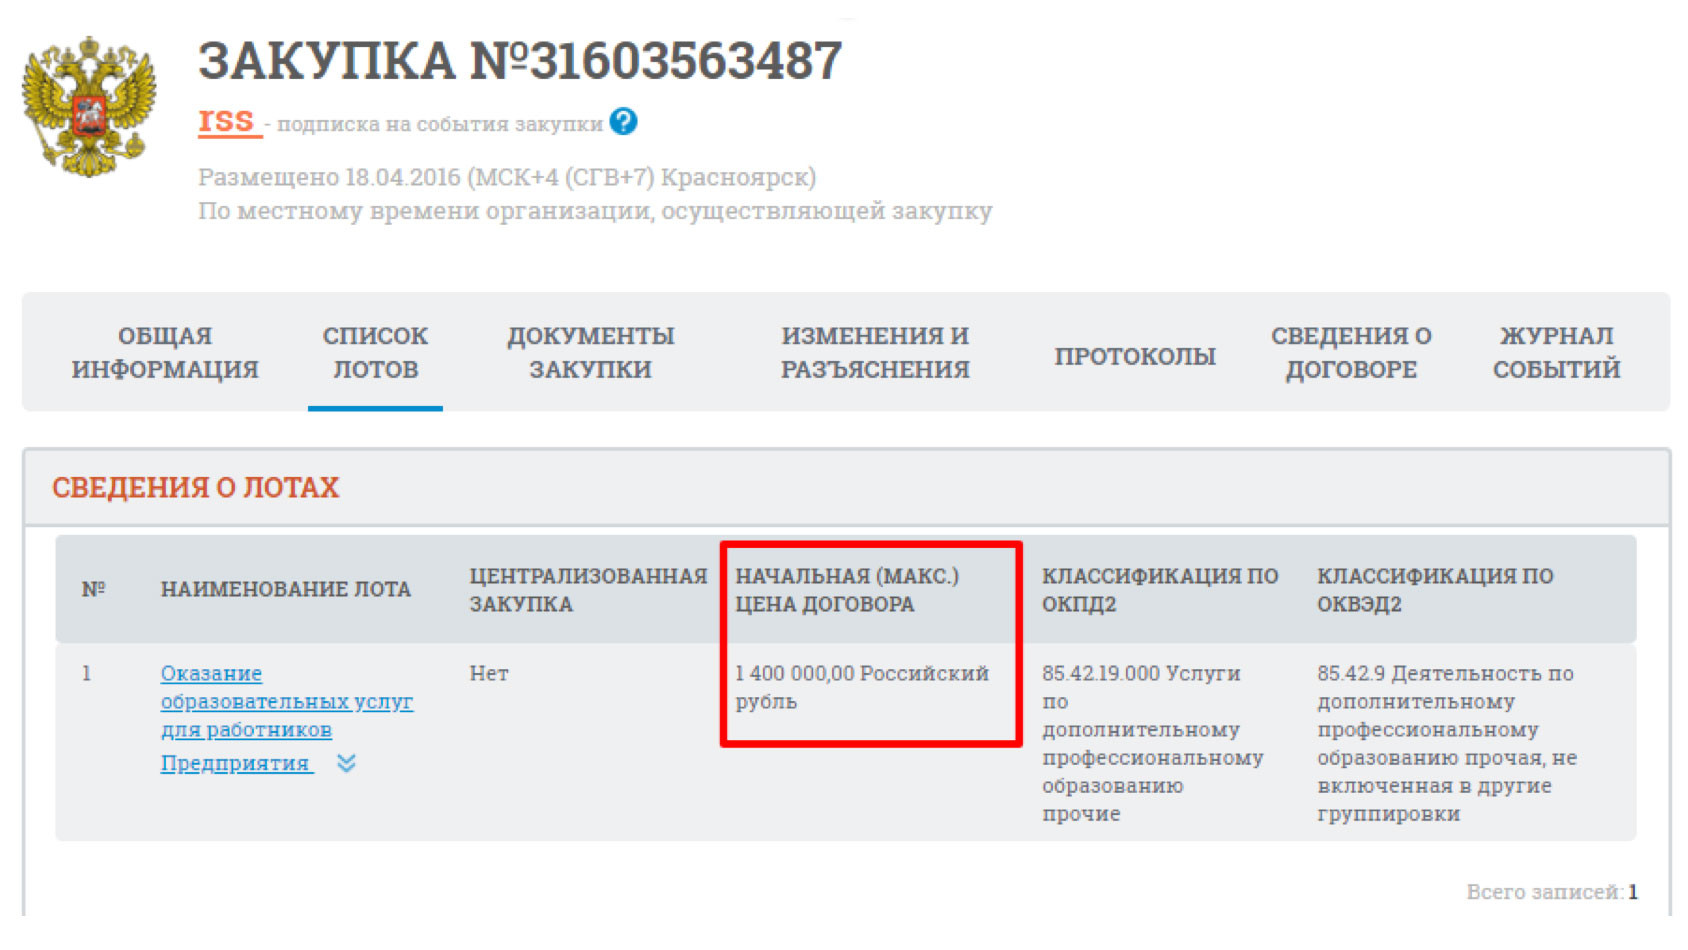 <p>Фото: &copy;&nbsp;<a href="http://zakupki.gov.ru/epz/main/public/home.html" target="_blank">zakupki.gov.ru</a></p>